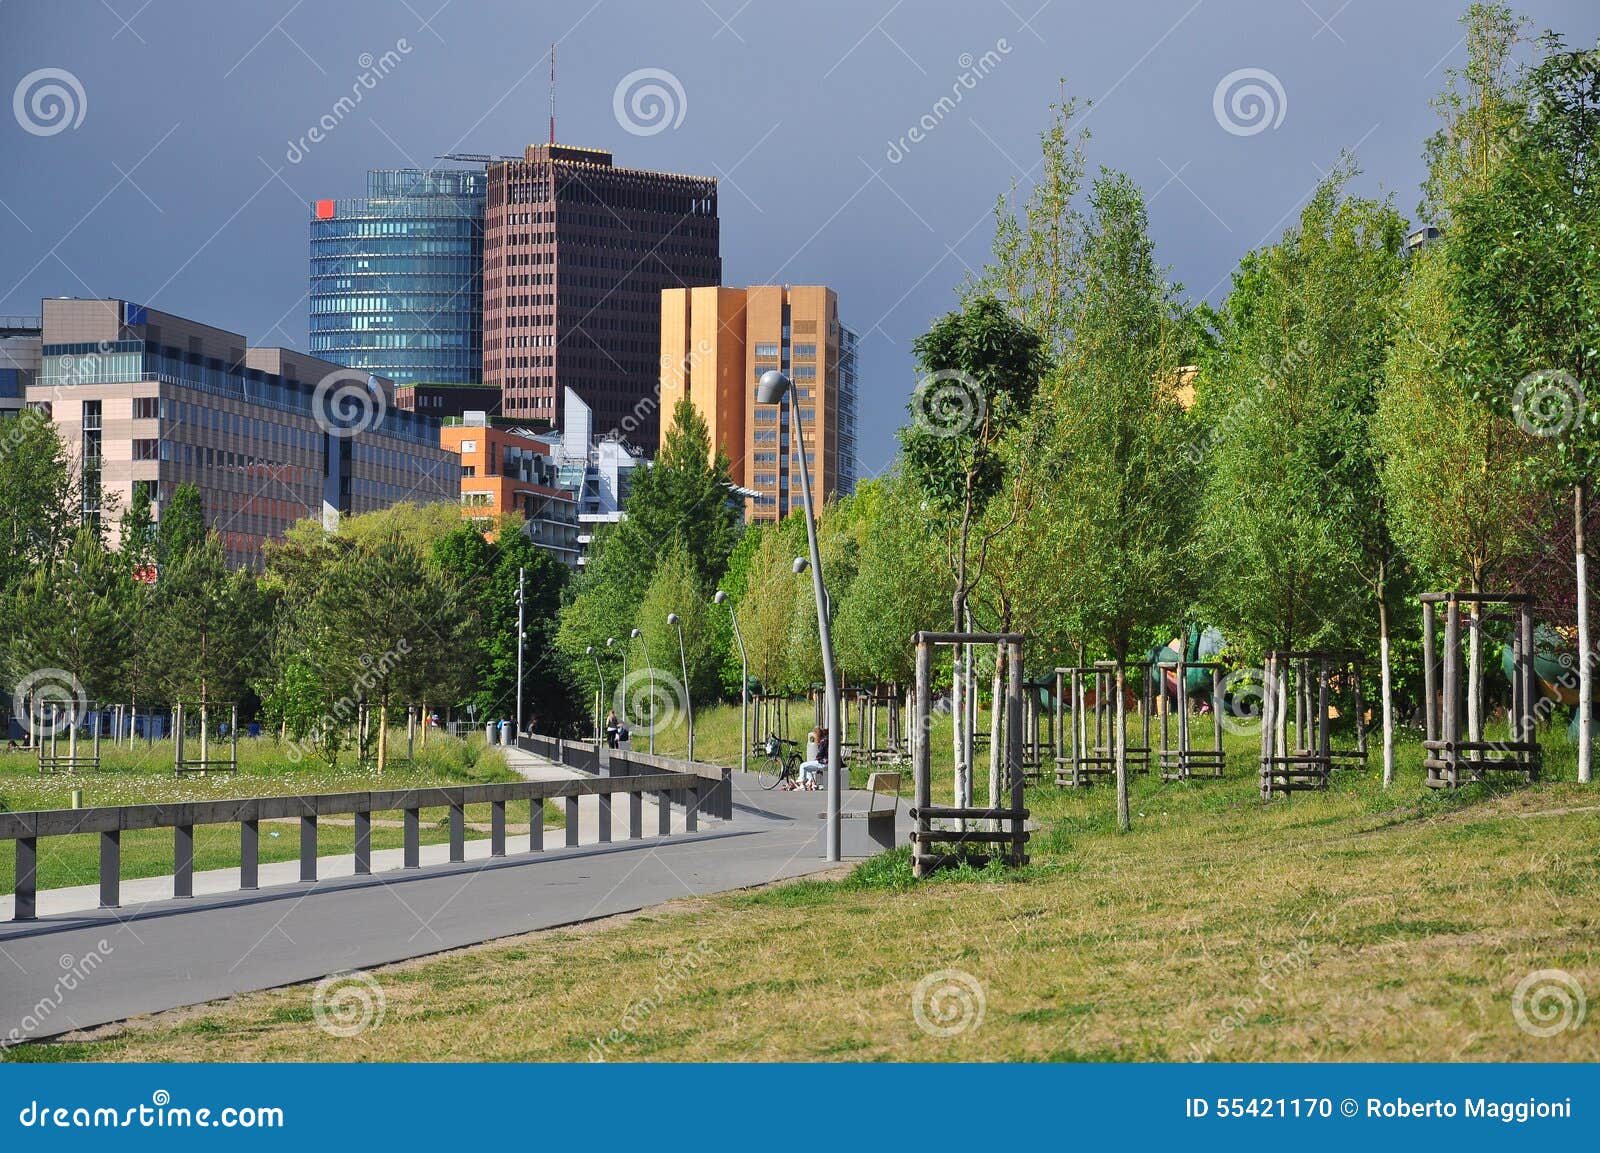 berlin, potsdamer platz and urban park view. germany